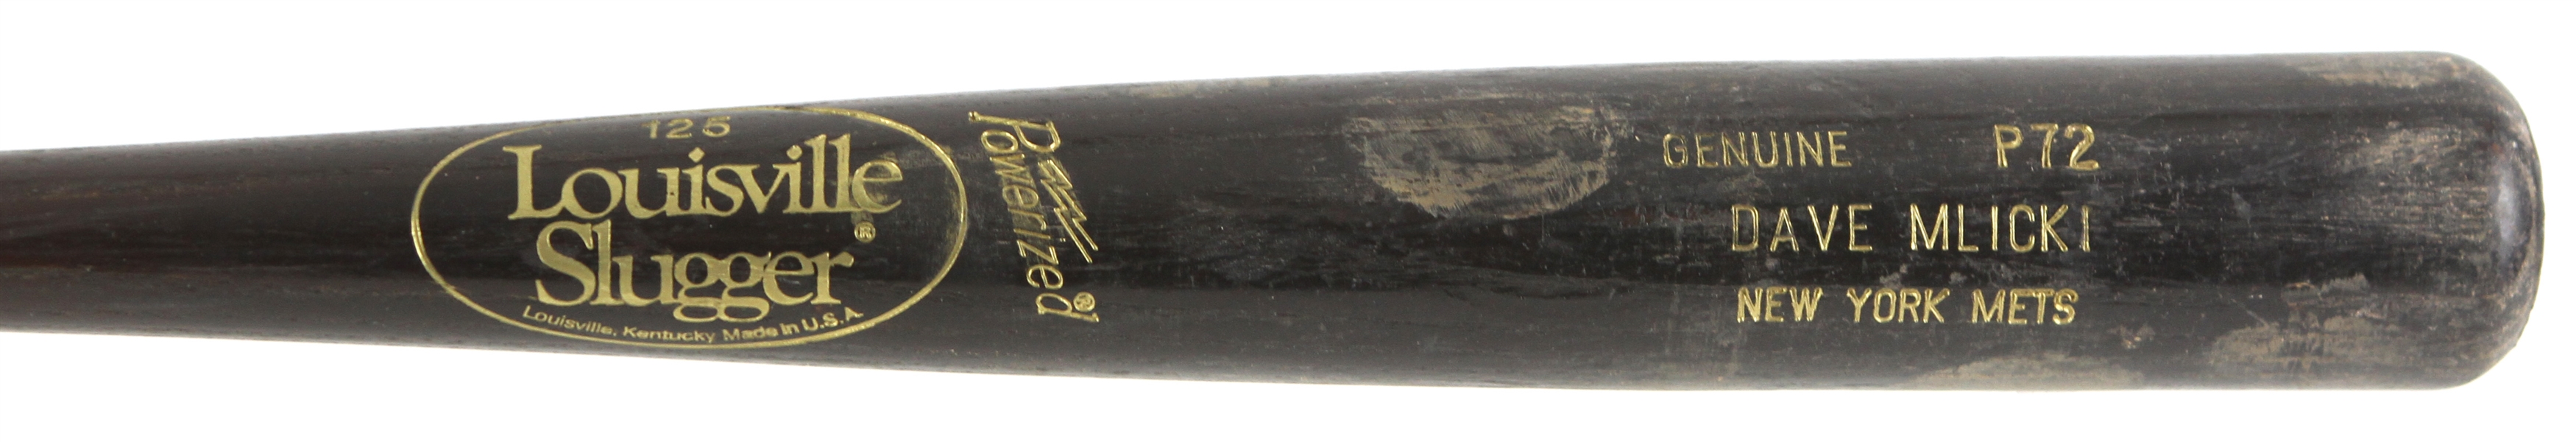 1995-97 Dave Mlicki New York Mets Louisville Slugger Professional Model Game Used Bat (MEARS LOA)